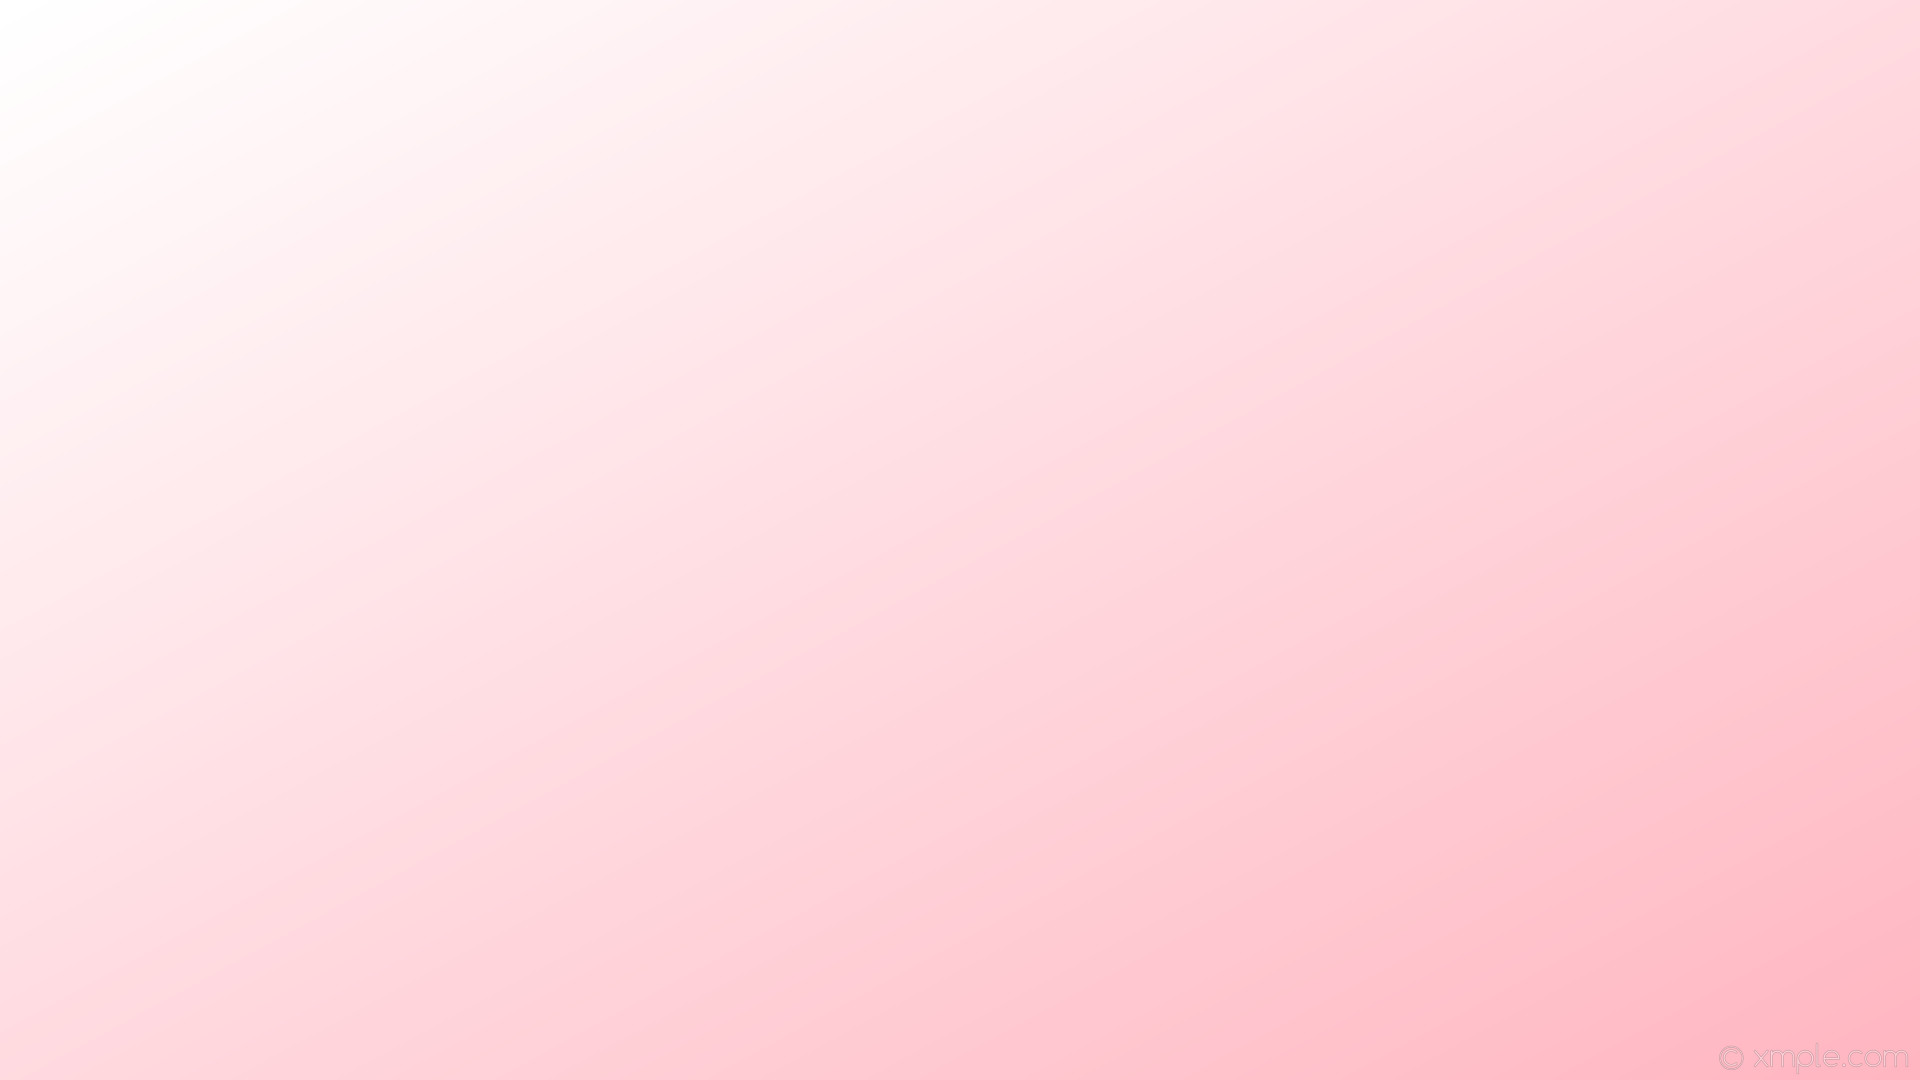 1920x1080 wallpaper white pink gradient linear light pink #ffffff #ffb6c1 150Â°